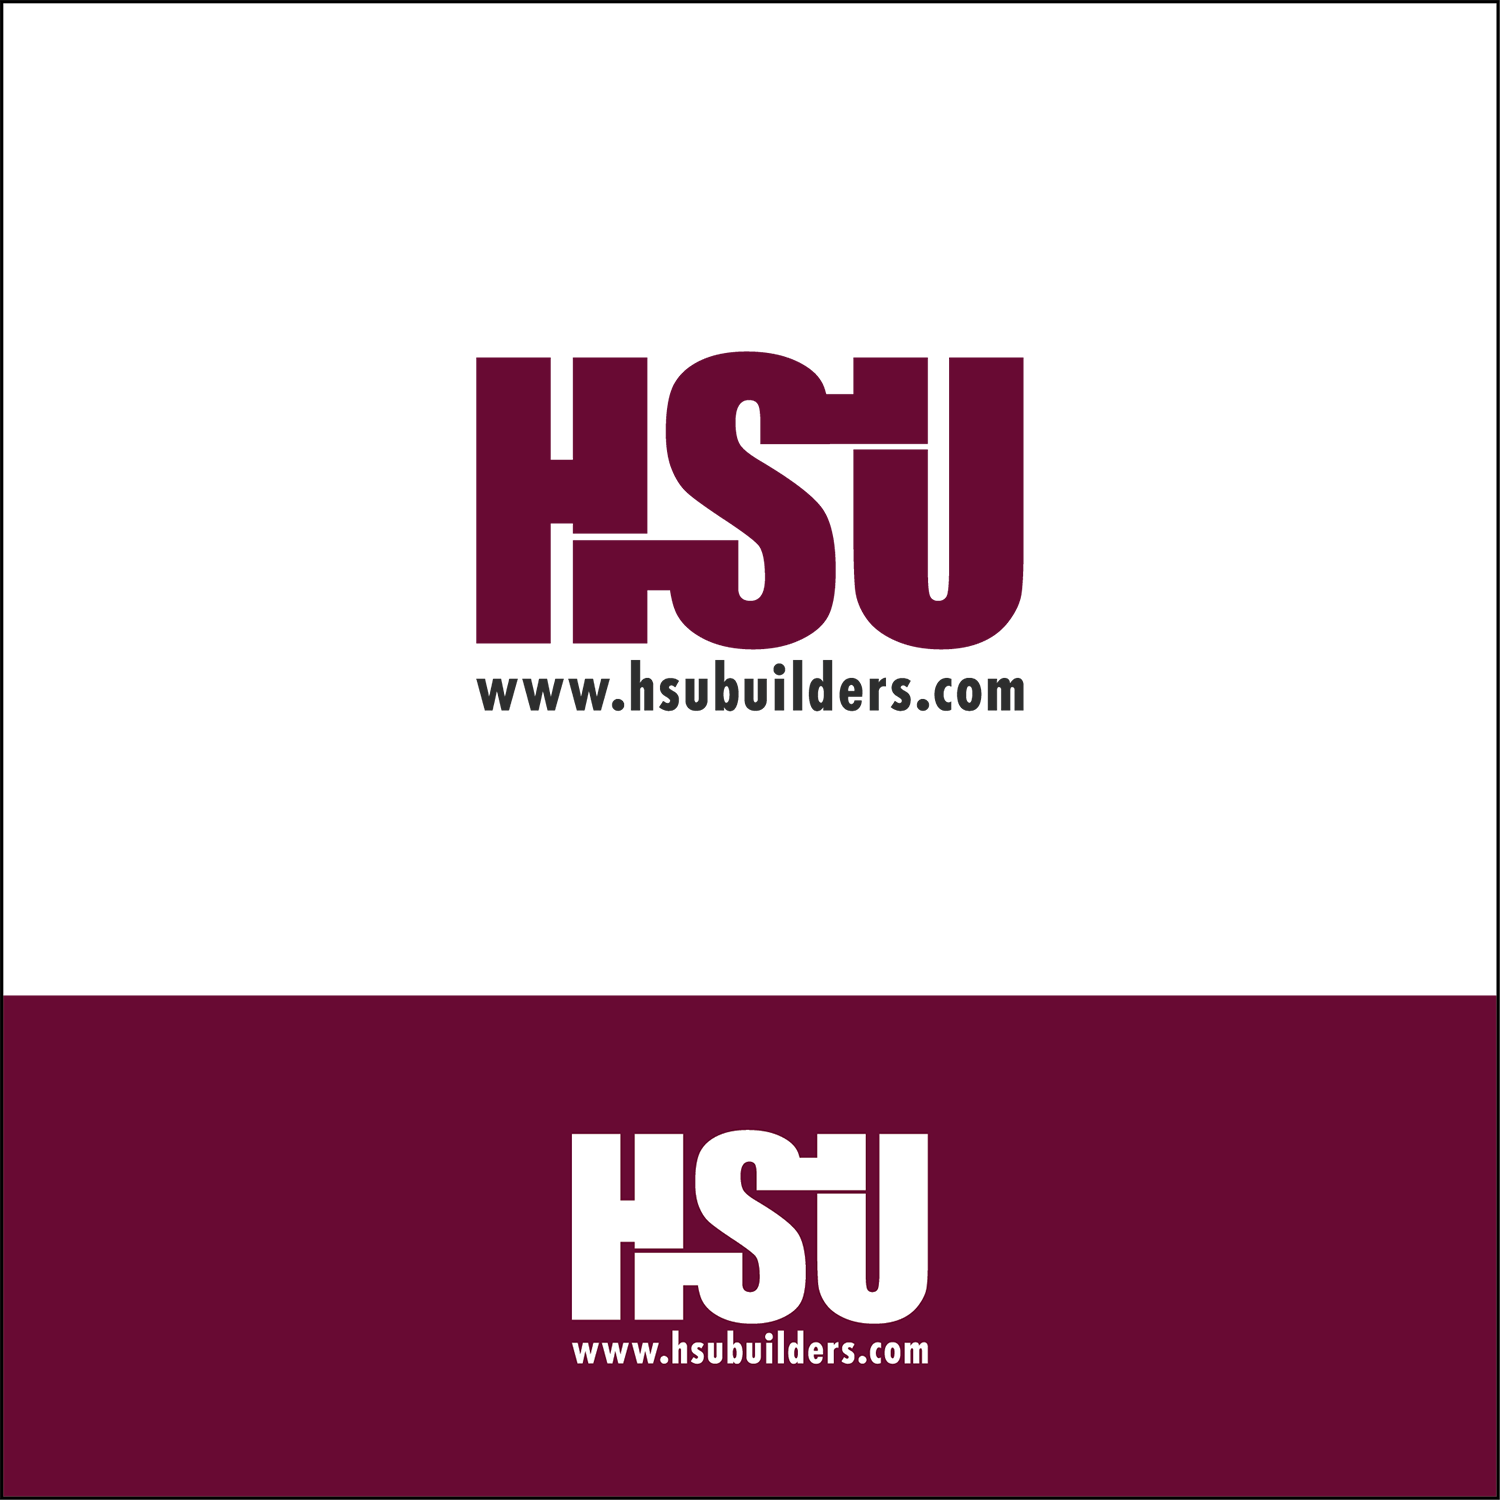 Hsu Logo - Serious, Professional, Construction Company Logo Design for Letters ...